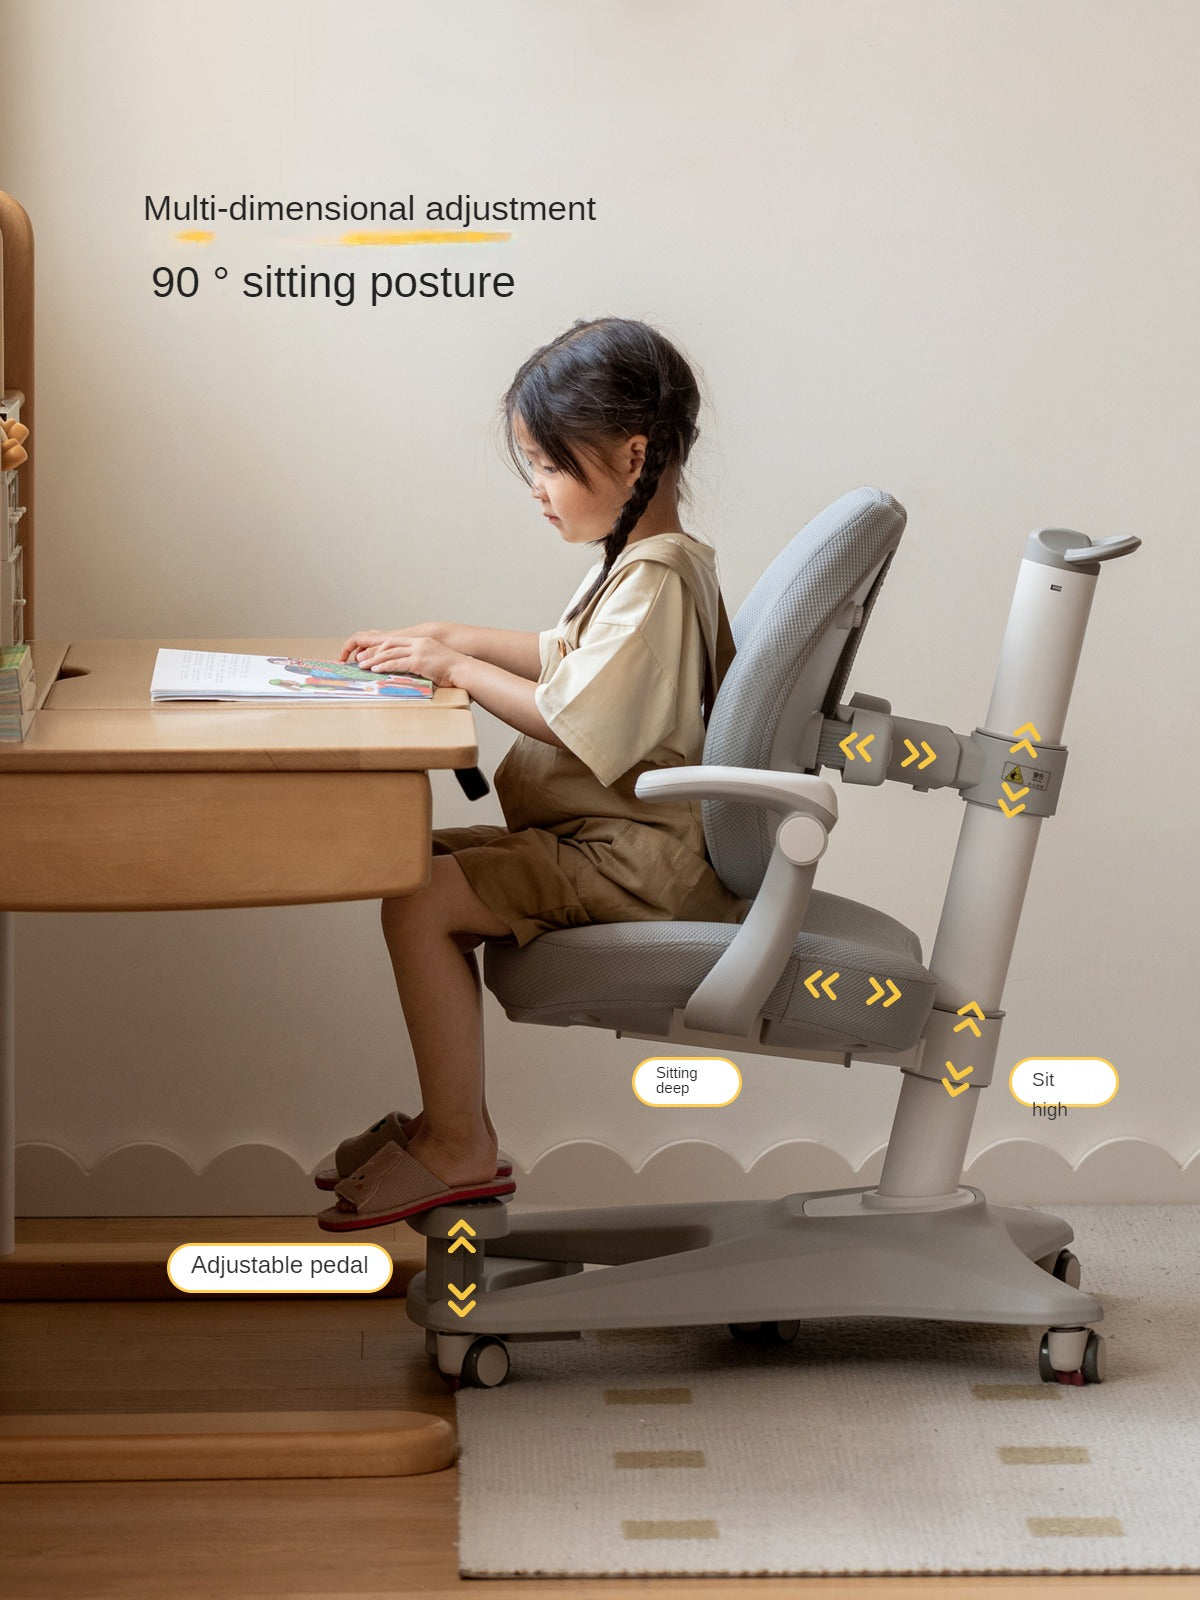 Children's Chair Adjustable Up-down "